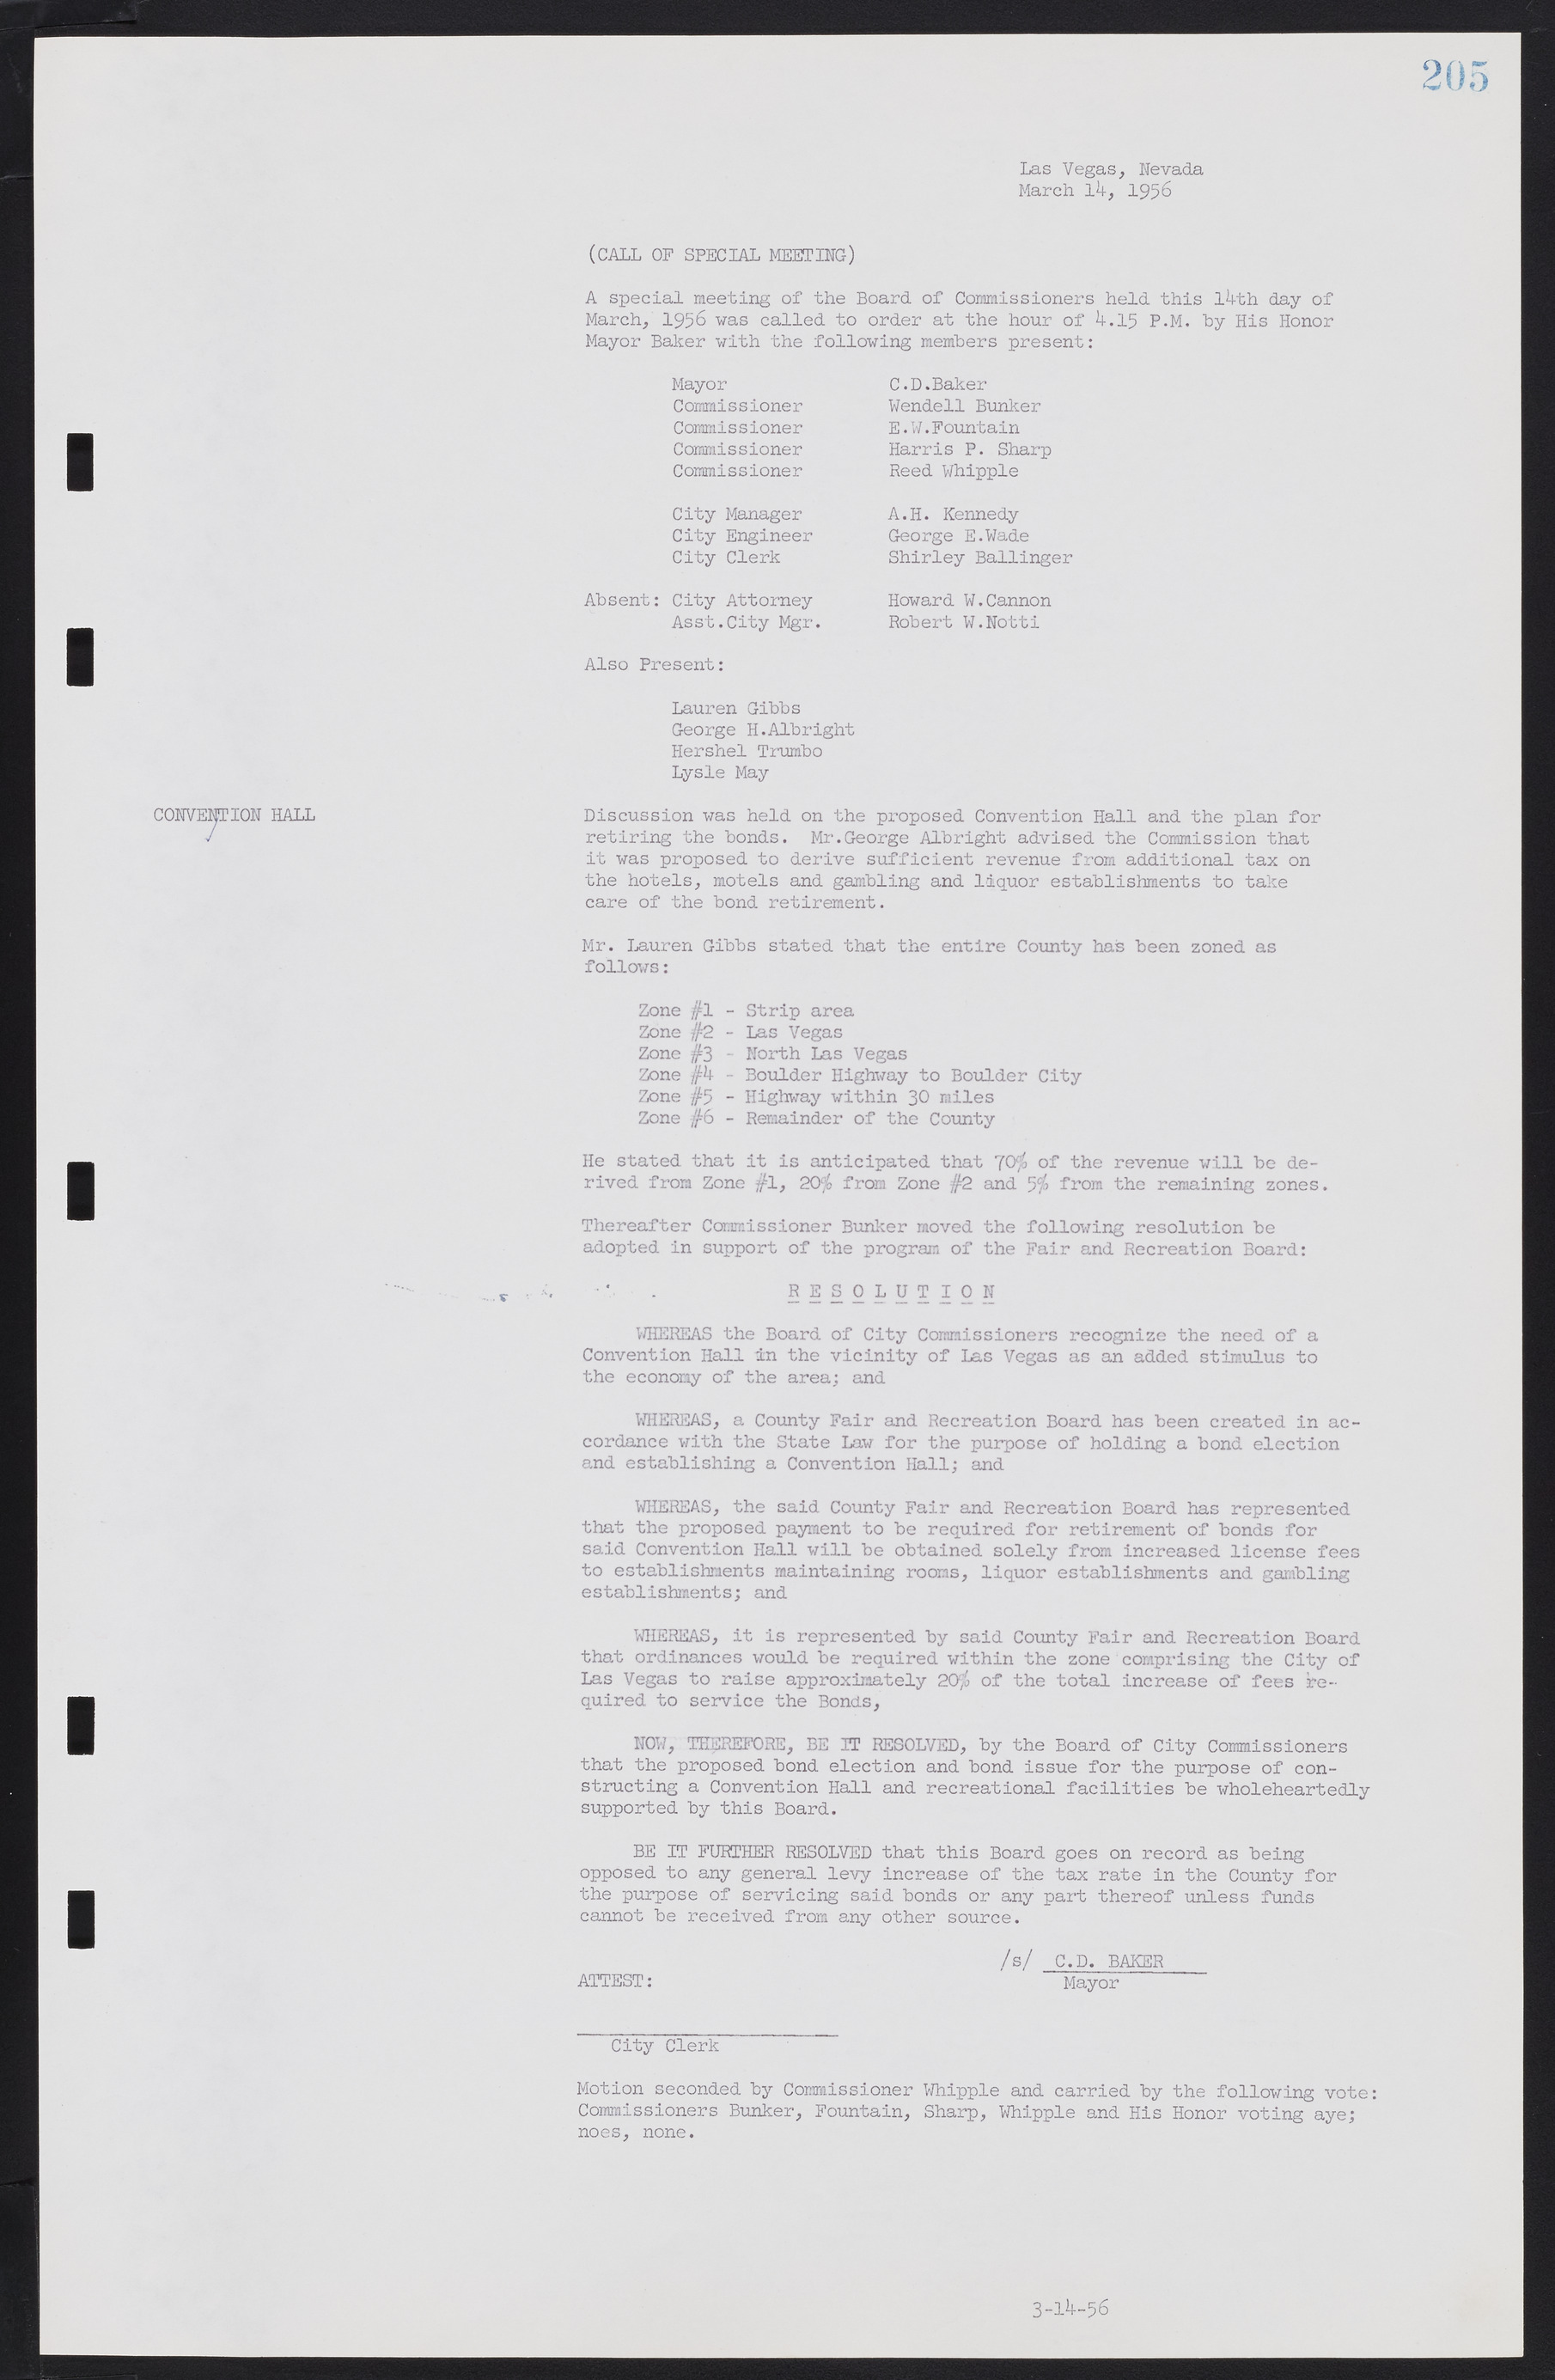 Las Vegas City Commission Minutes, September 21, 1955 to November 20, 1957, lvc000010-223